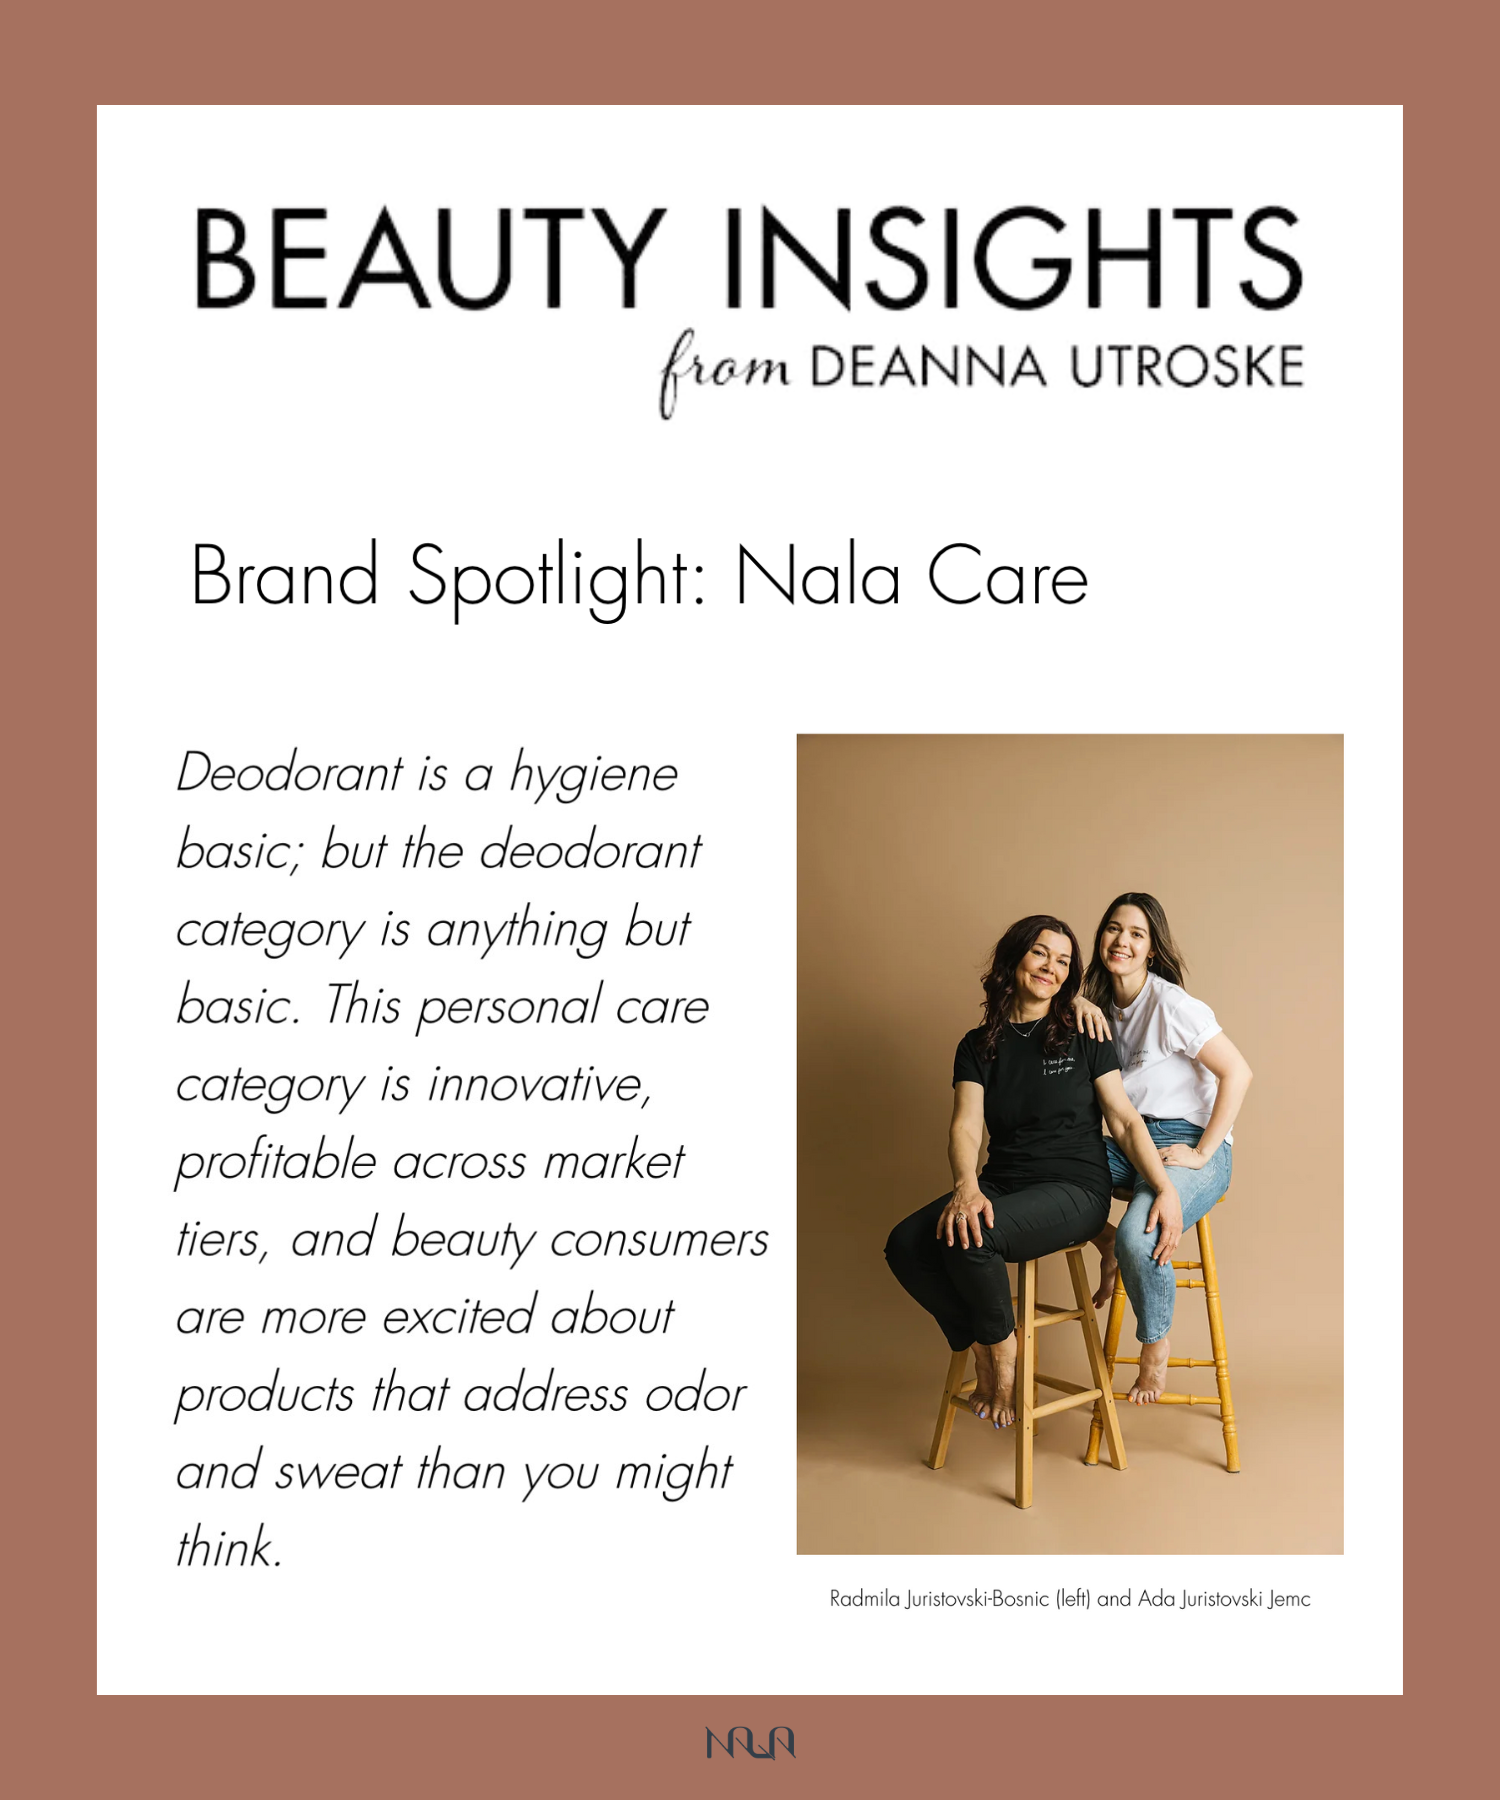 Beauty Insights with Deanna Utroske: Brand Spotlight Nala Care